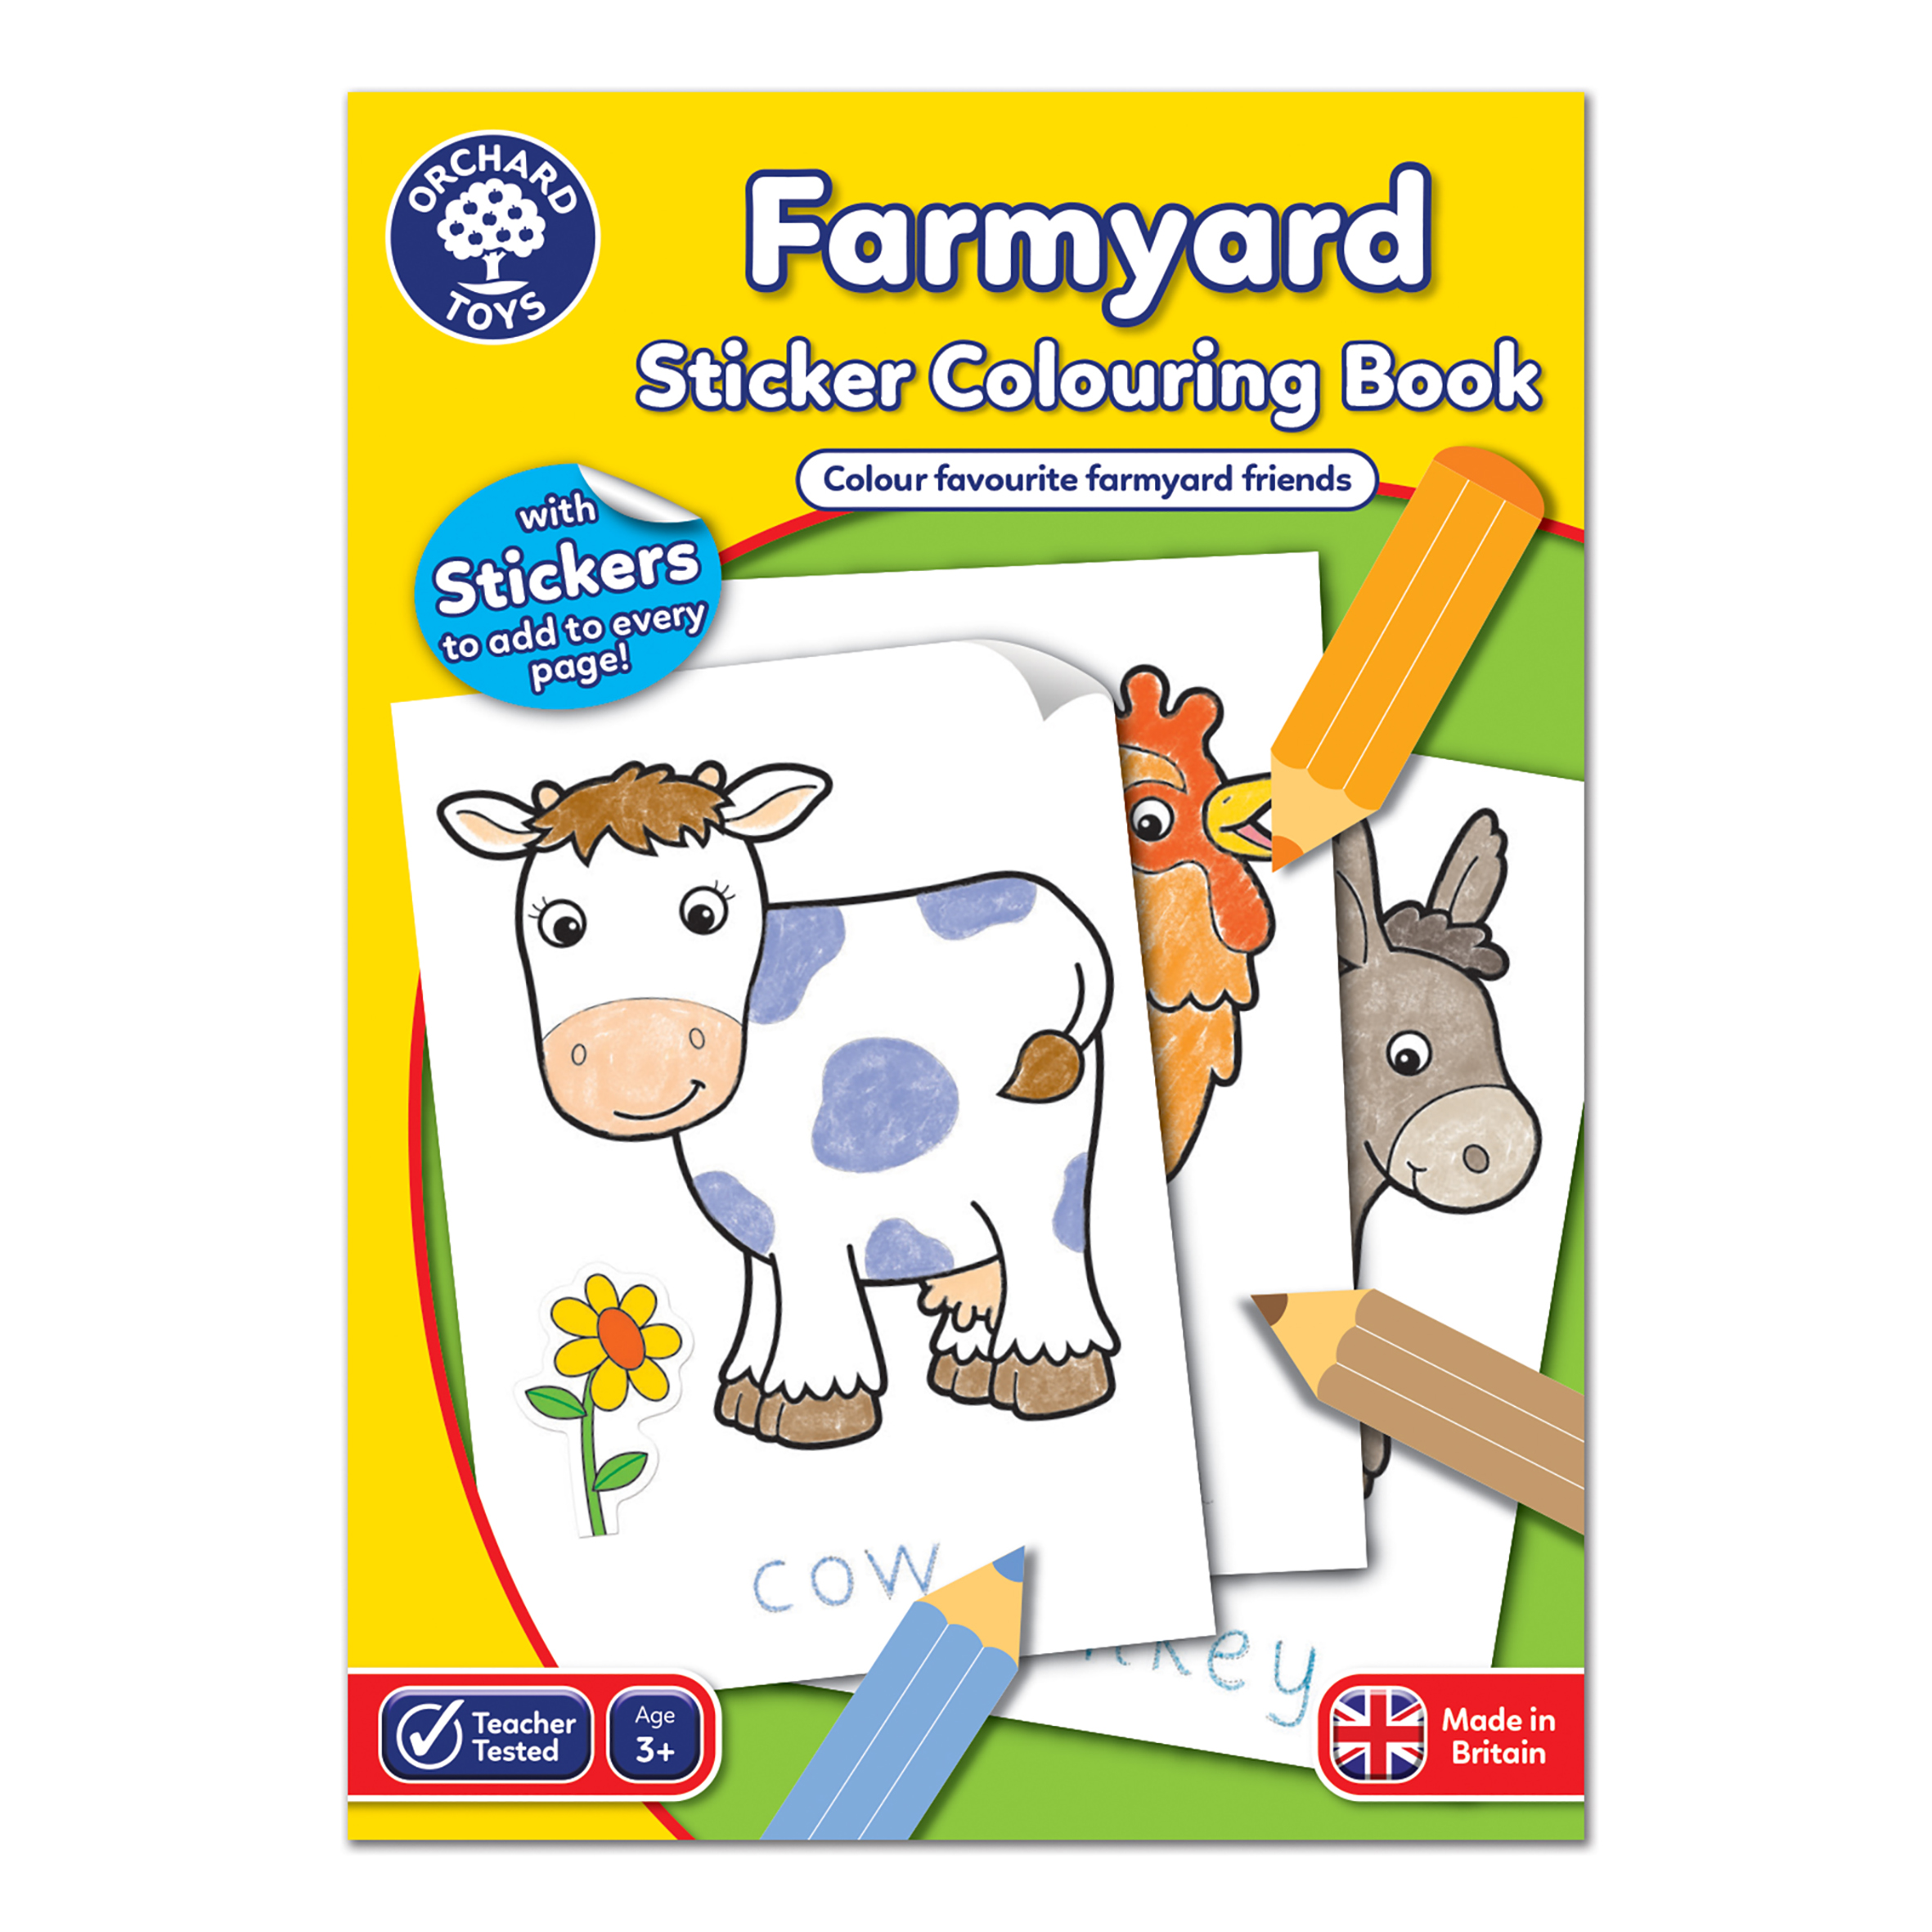 Farmyard COVER